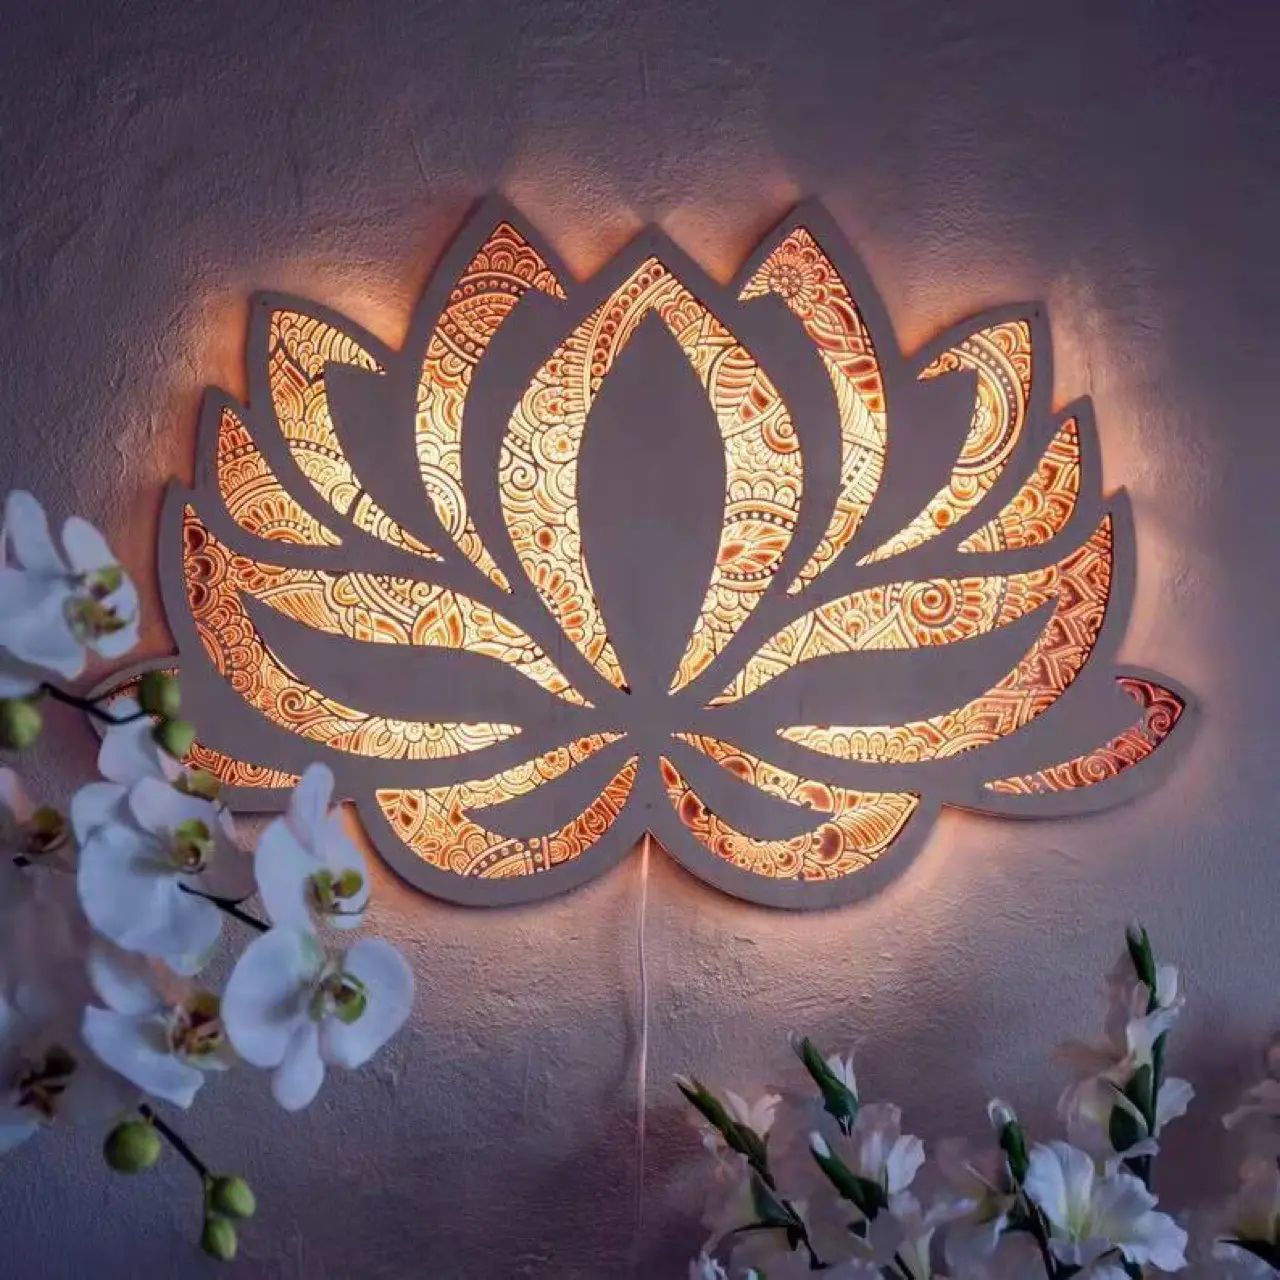 Lotus Flower Light Mandala Yoga Room Art Decorative Ornaments lotus Mandala Hanging Night Wall Light for home